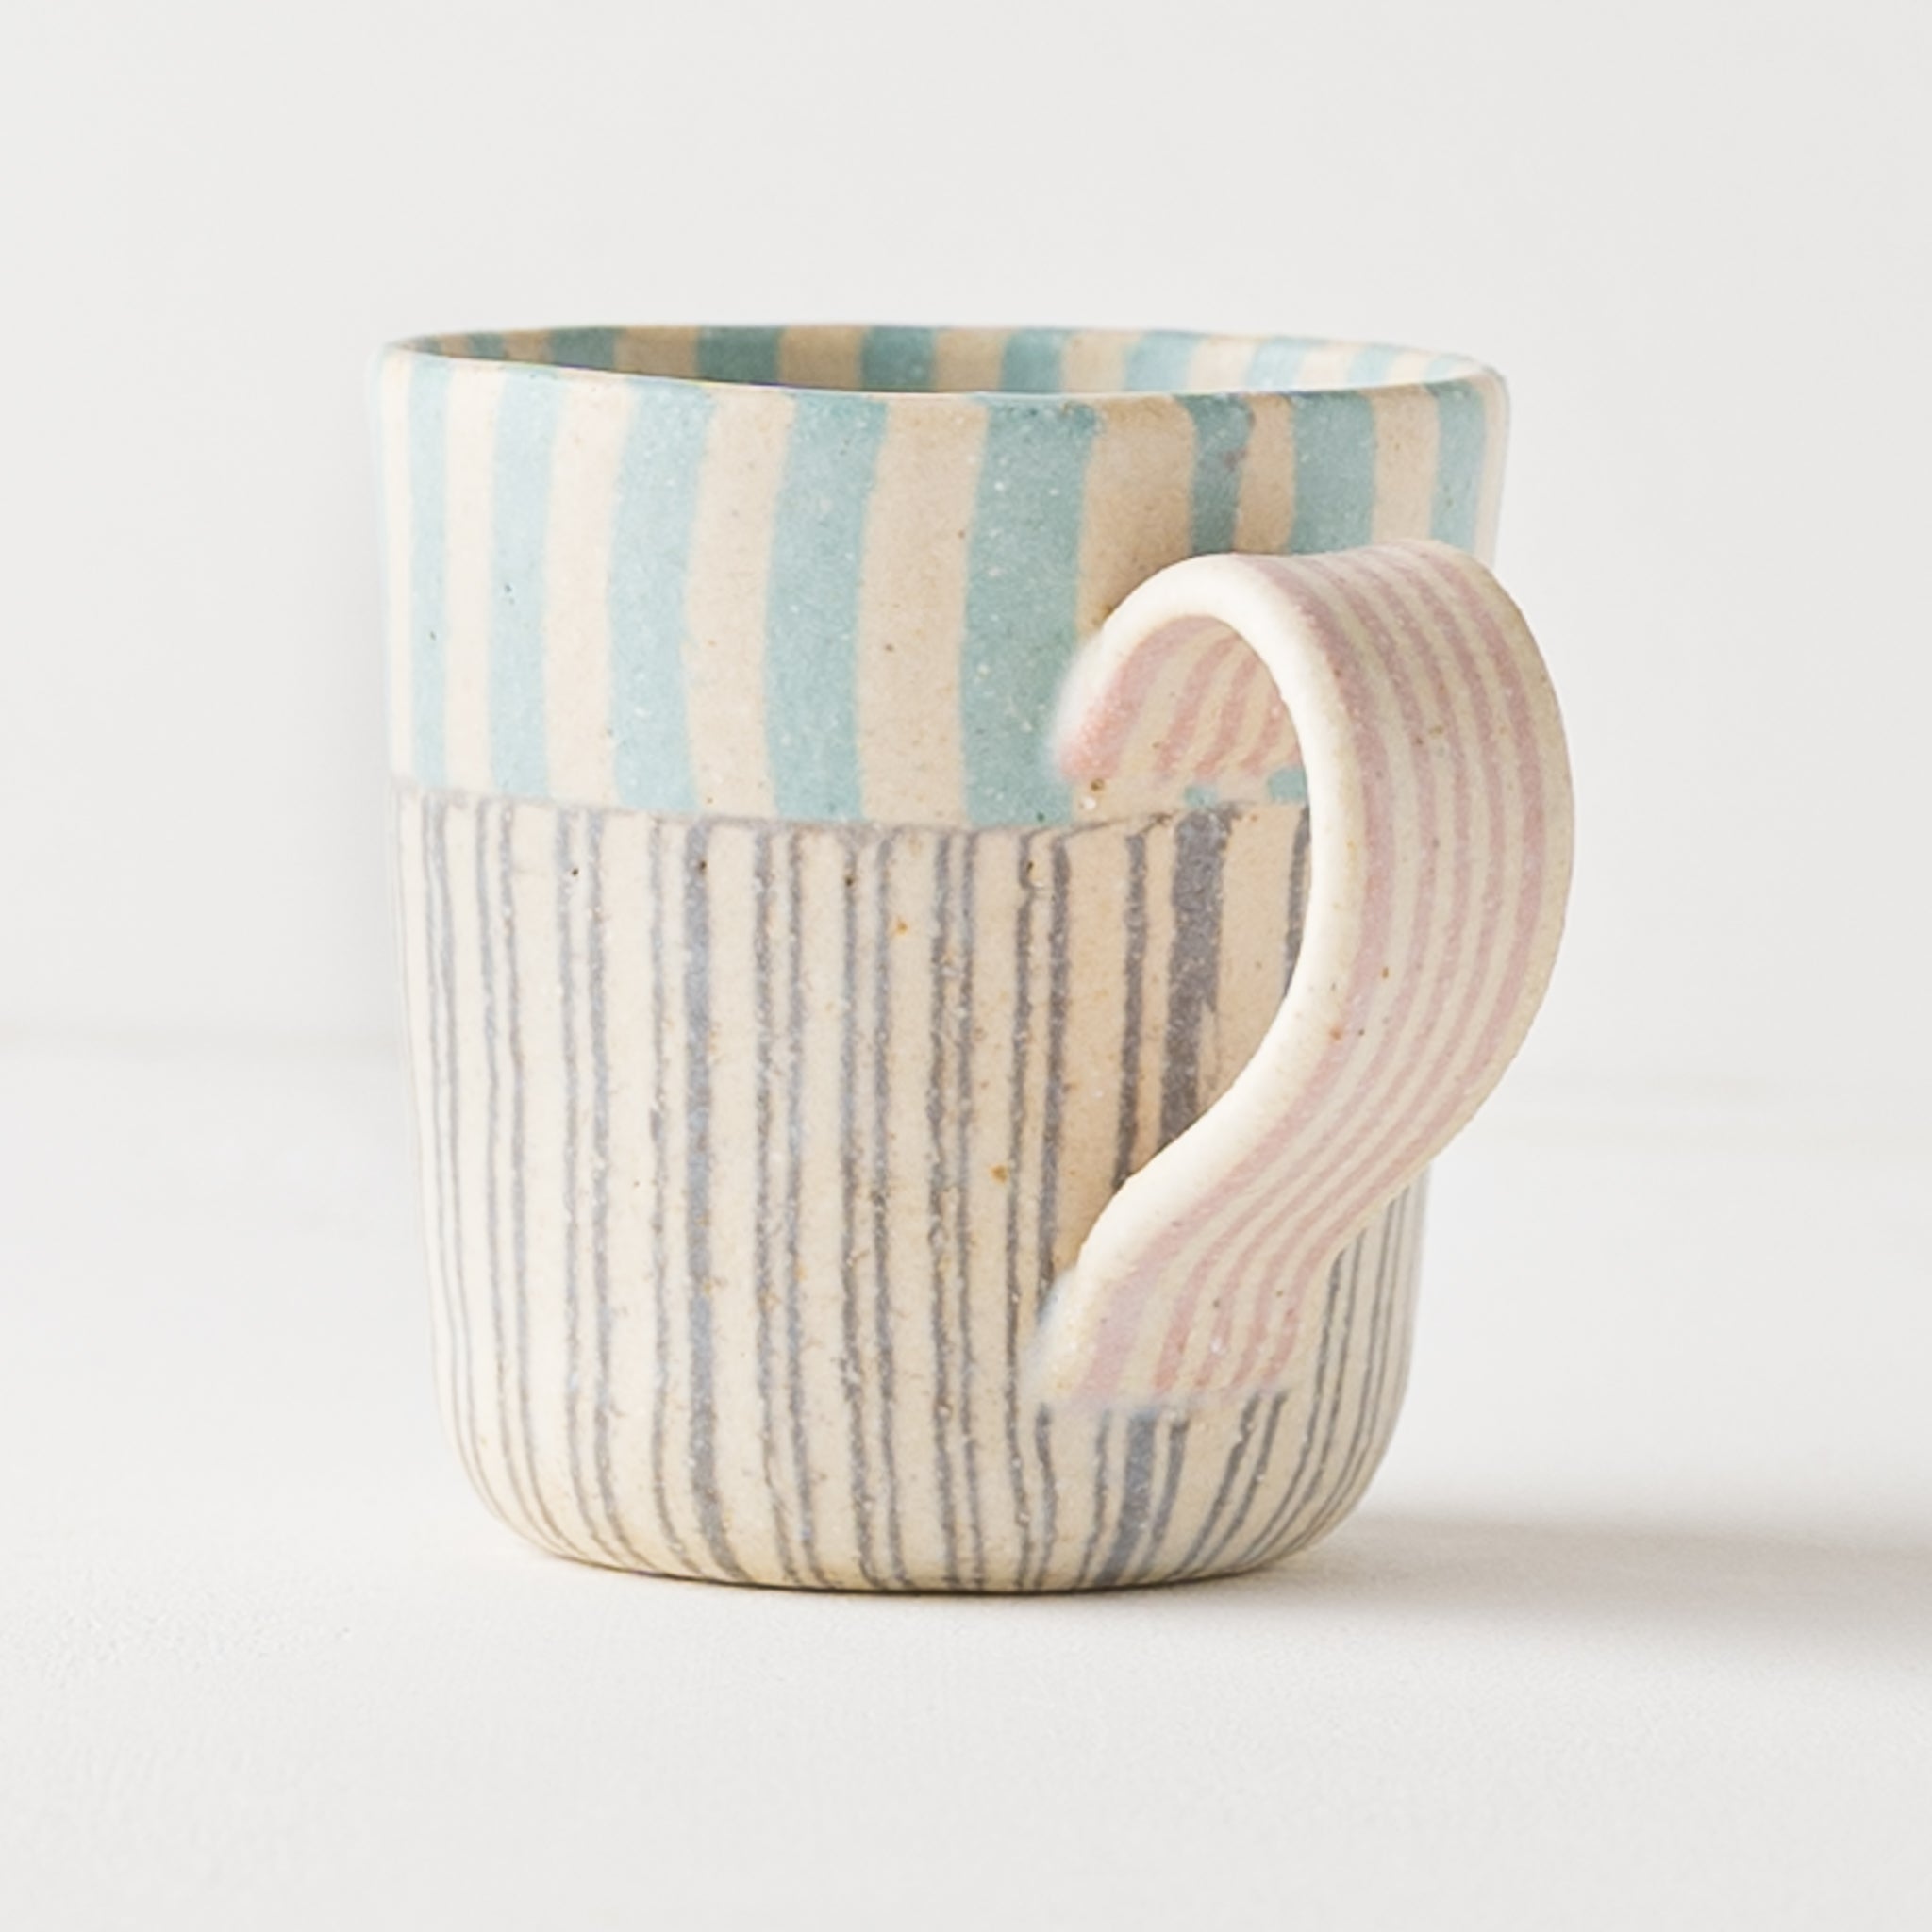 Hanako Sakashita's kneaded mug with gentle light blue and pink.